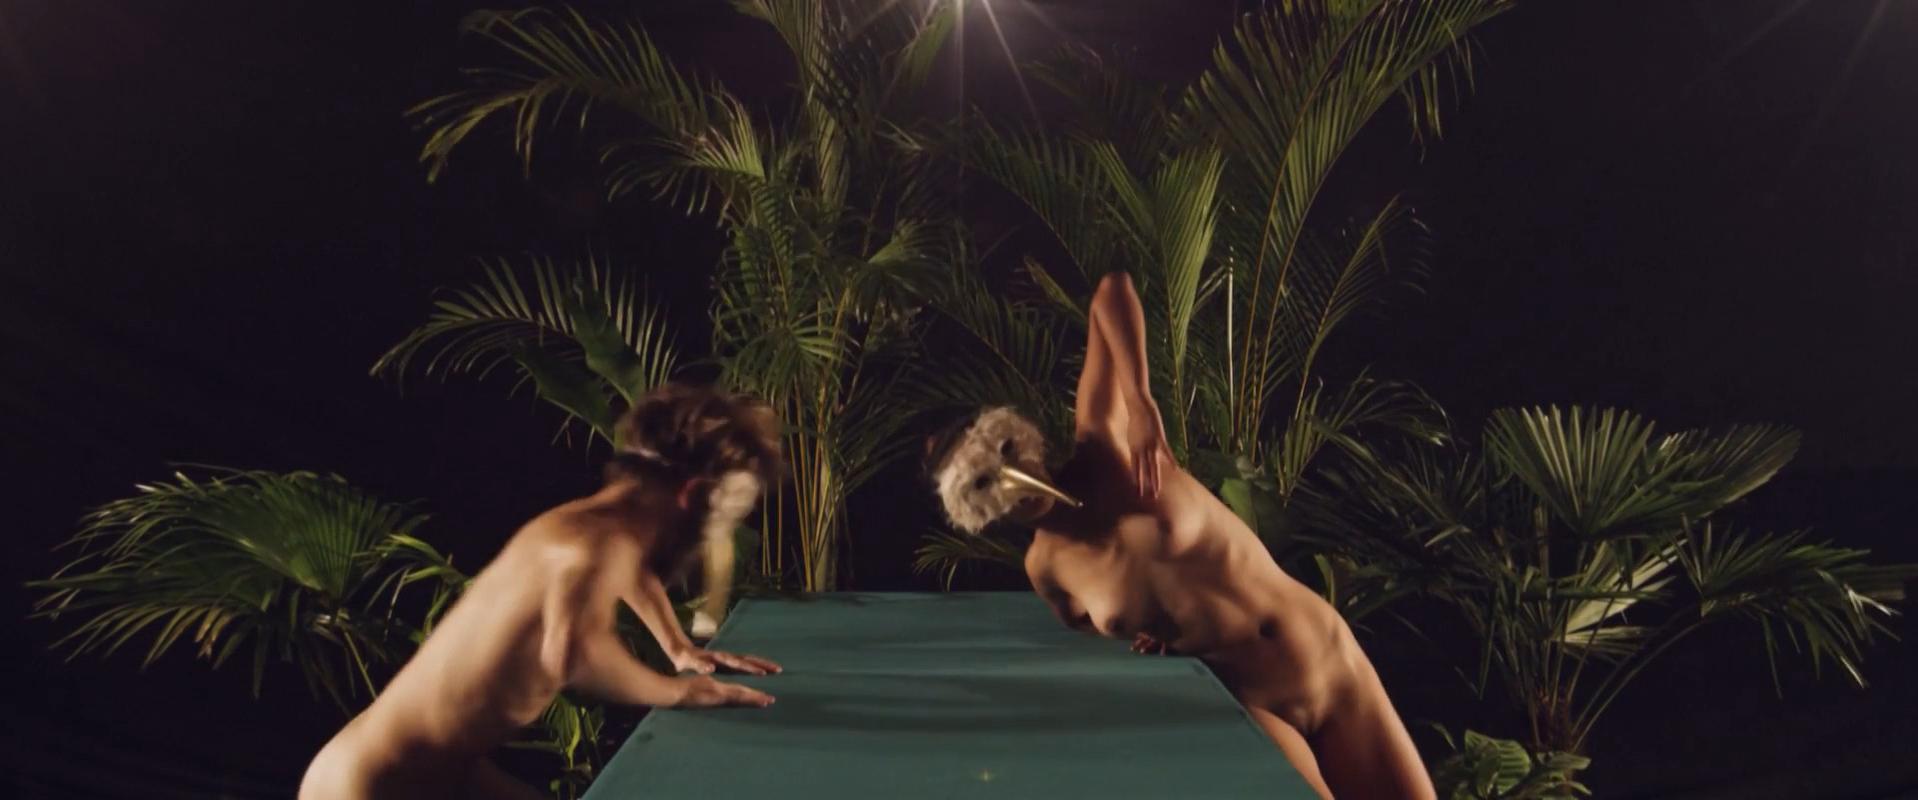 Malki Pinsag nude - Inanimado (2014)